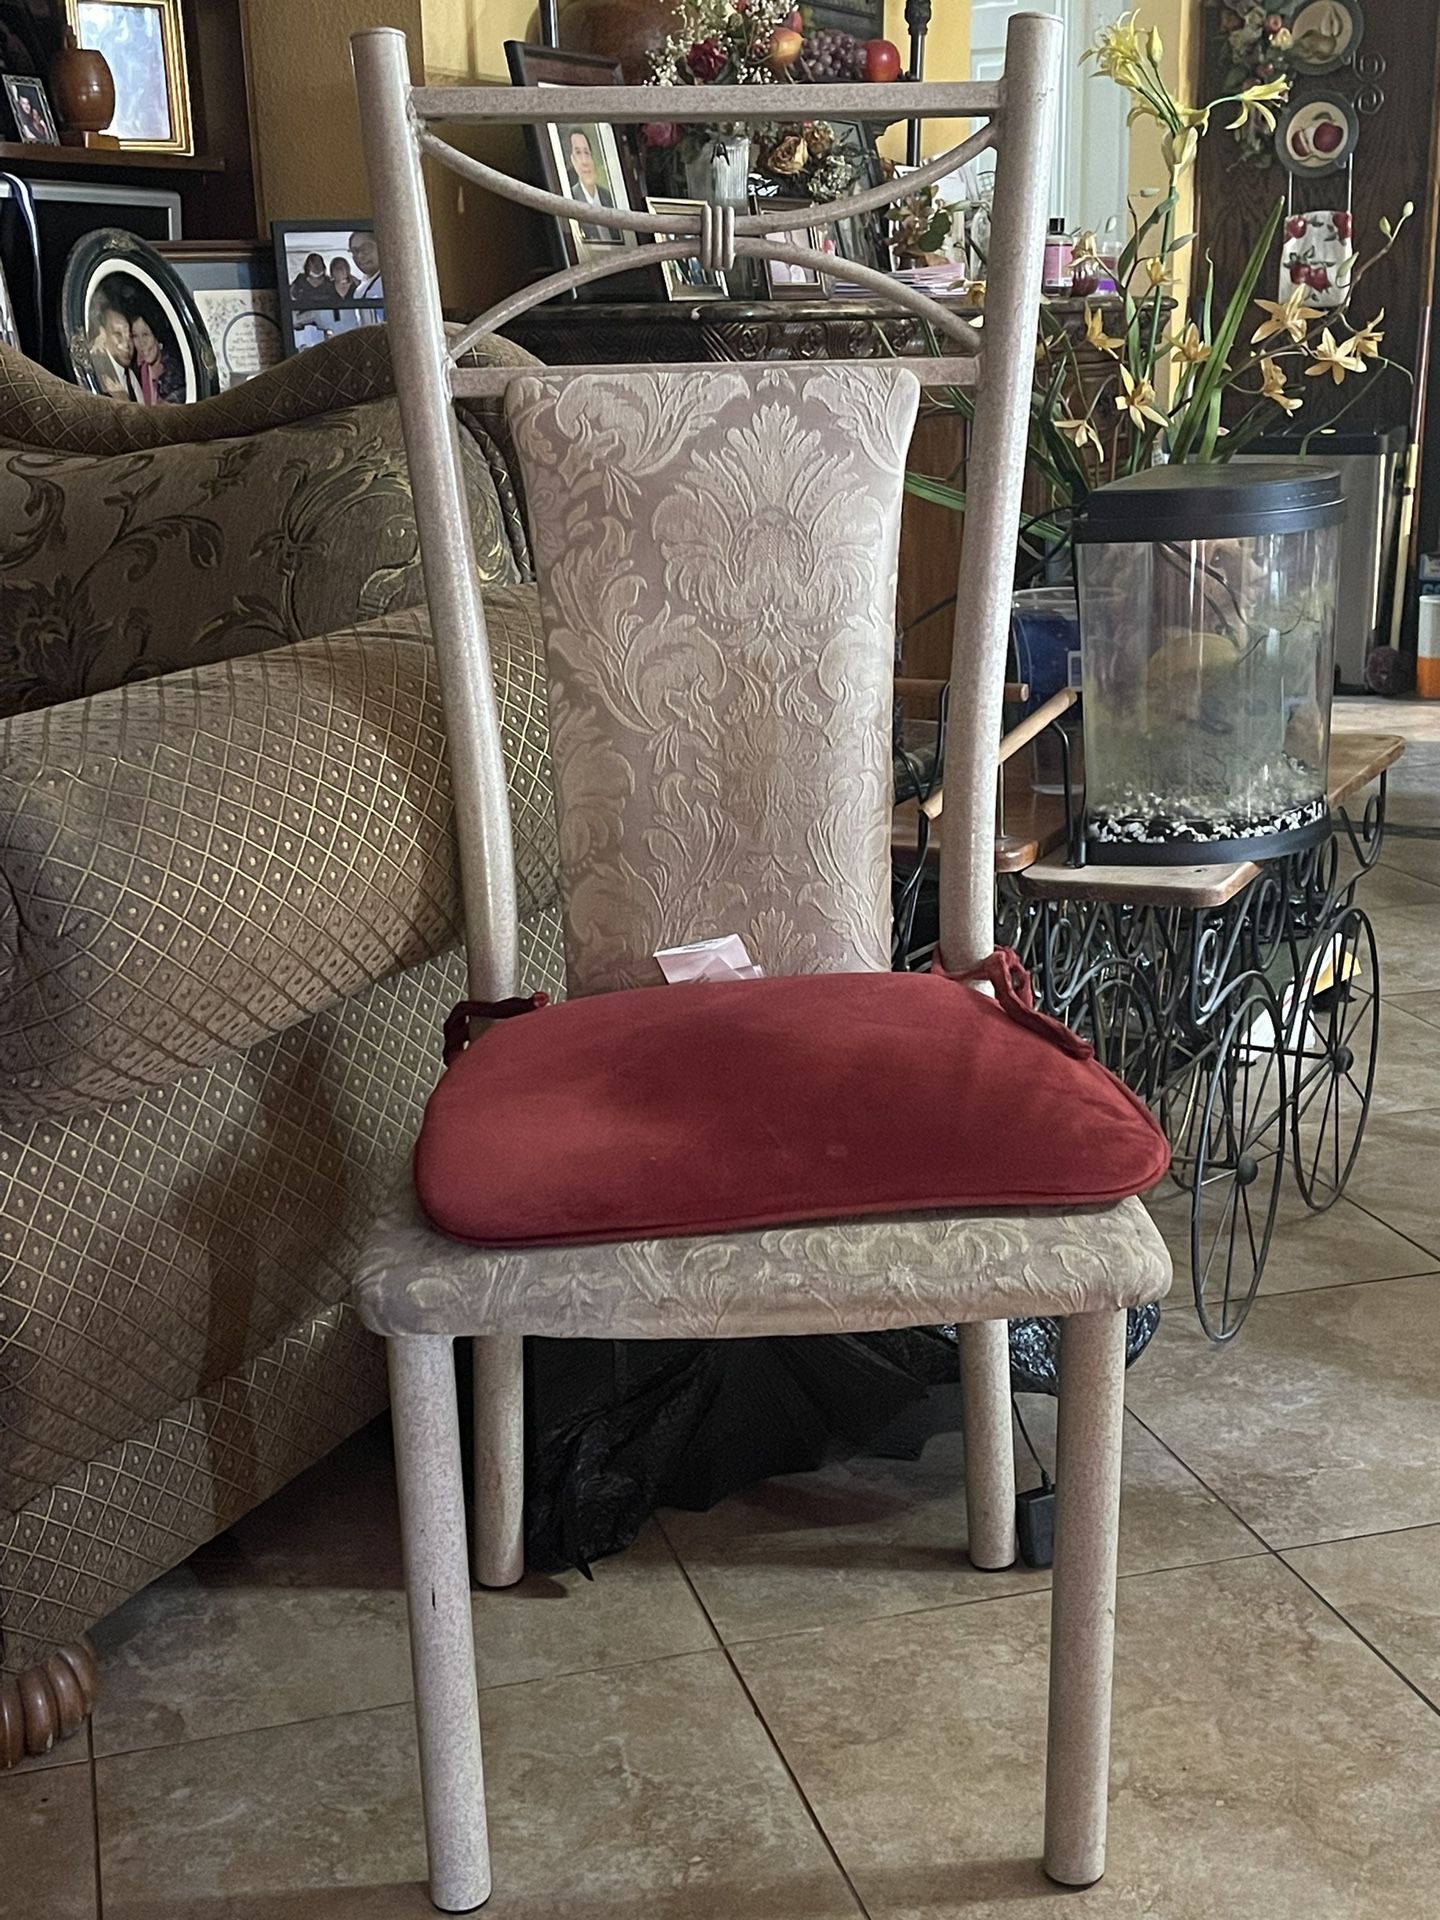 White Decorative Chair $10